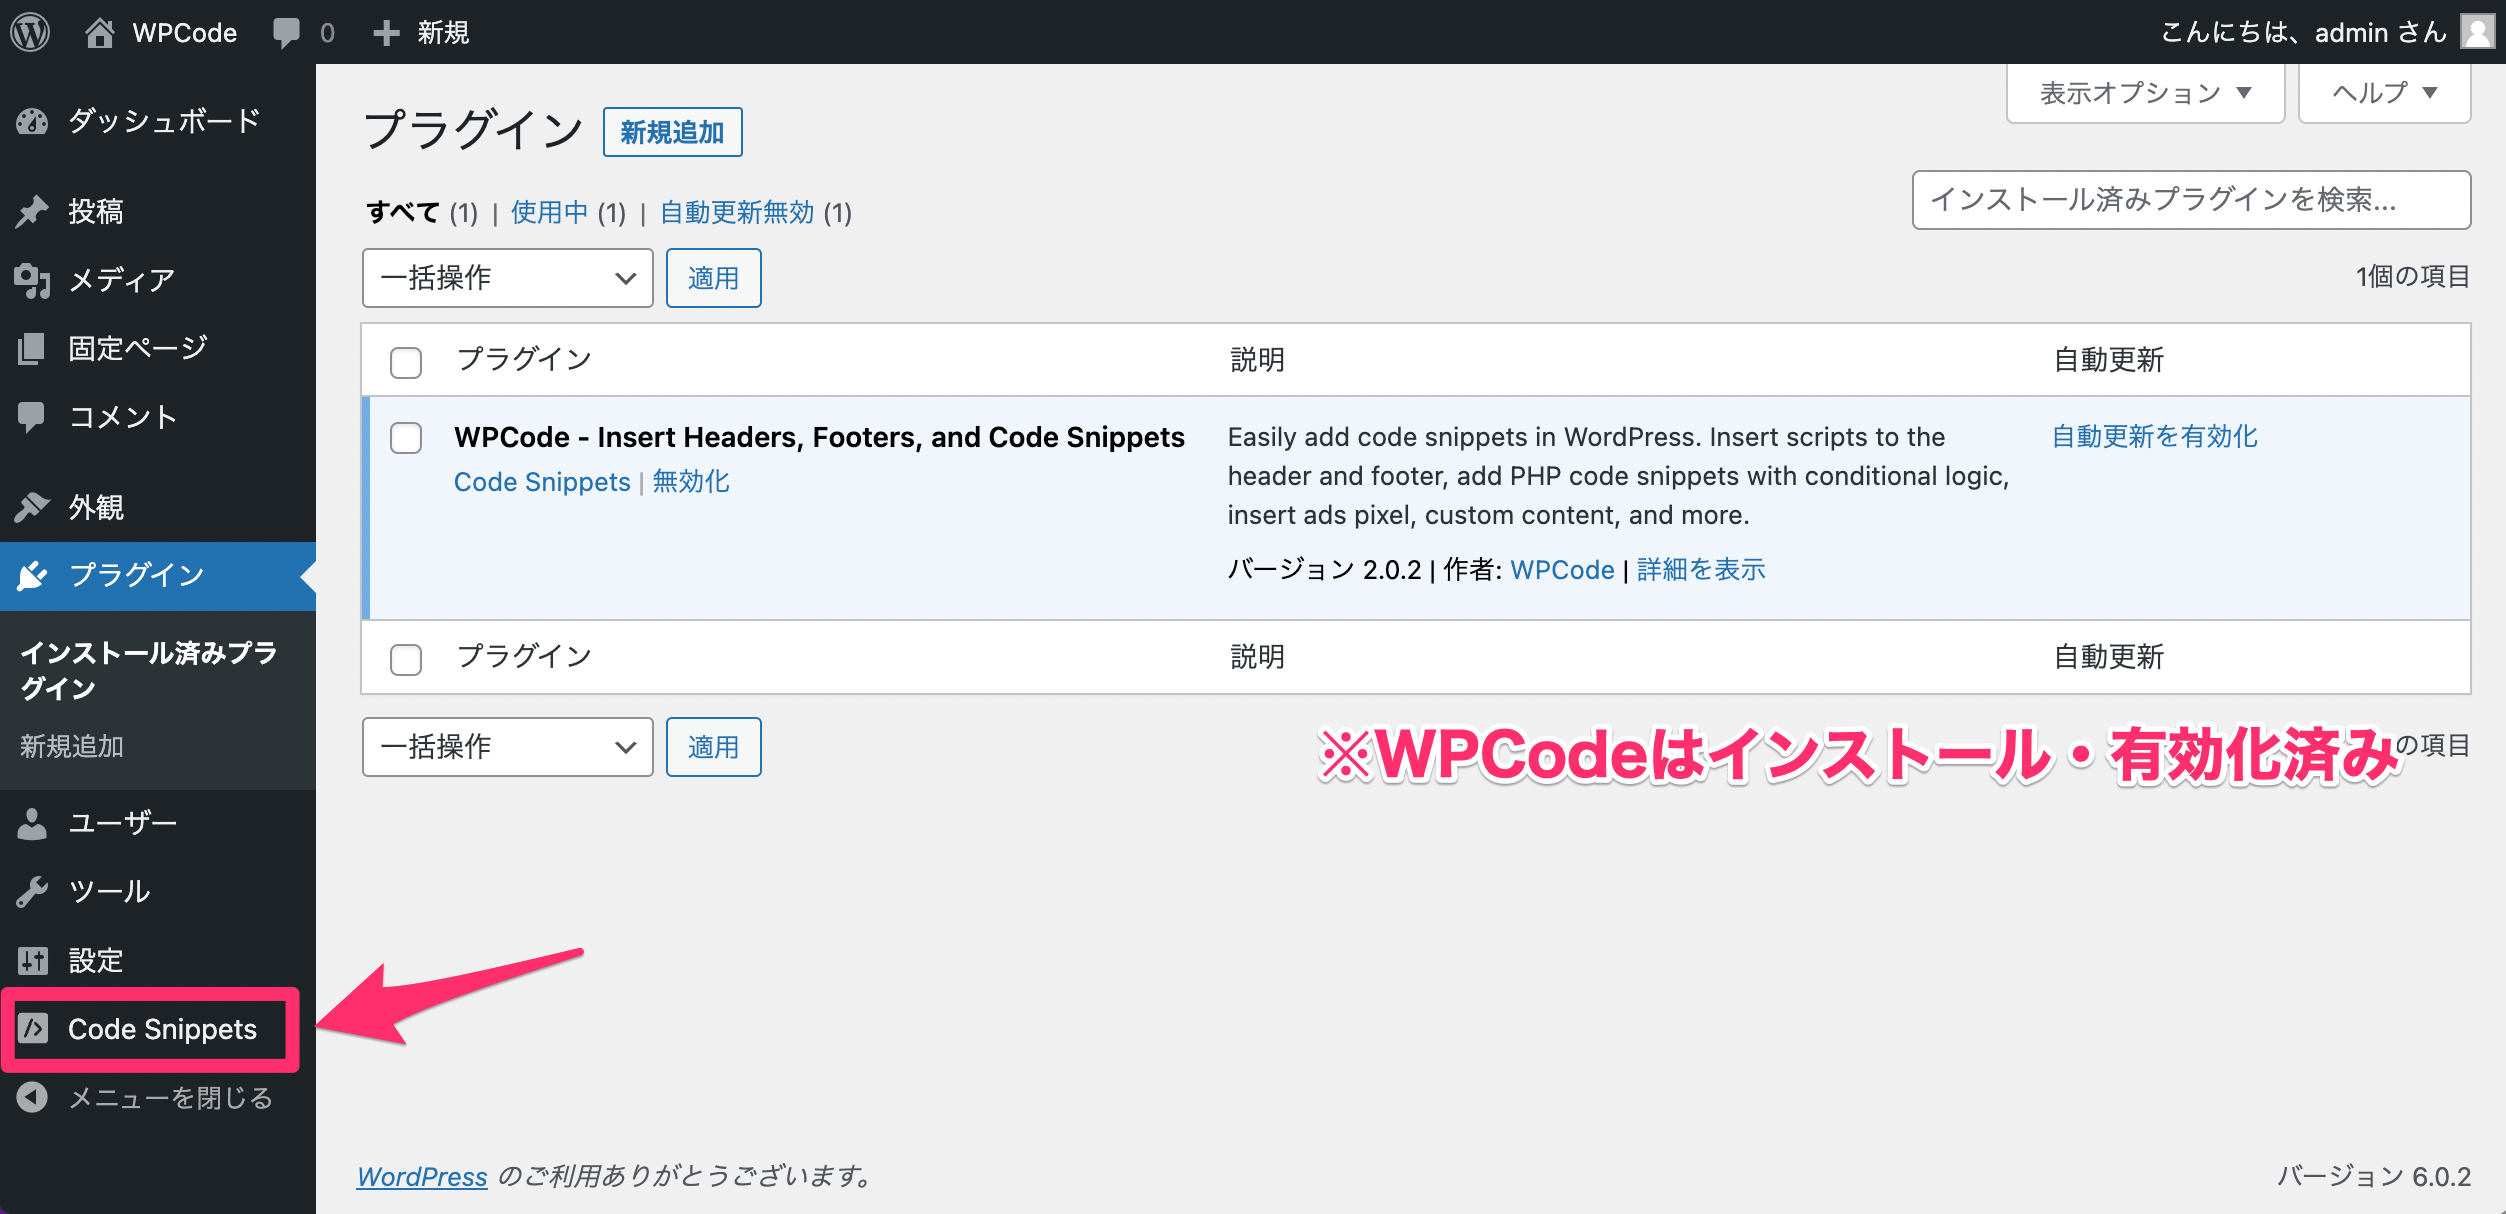 WPCodeをインストール後『Code Snippets』をクリック